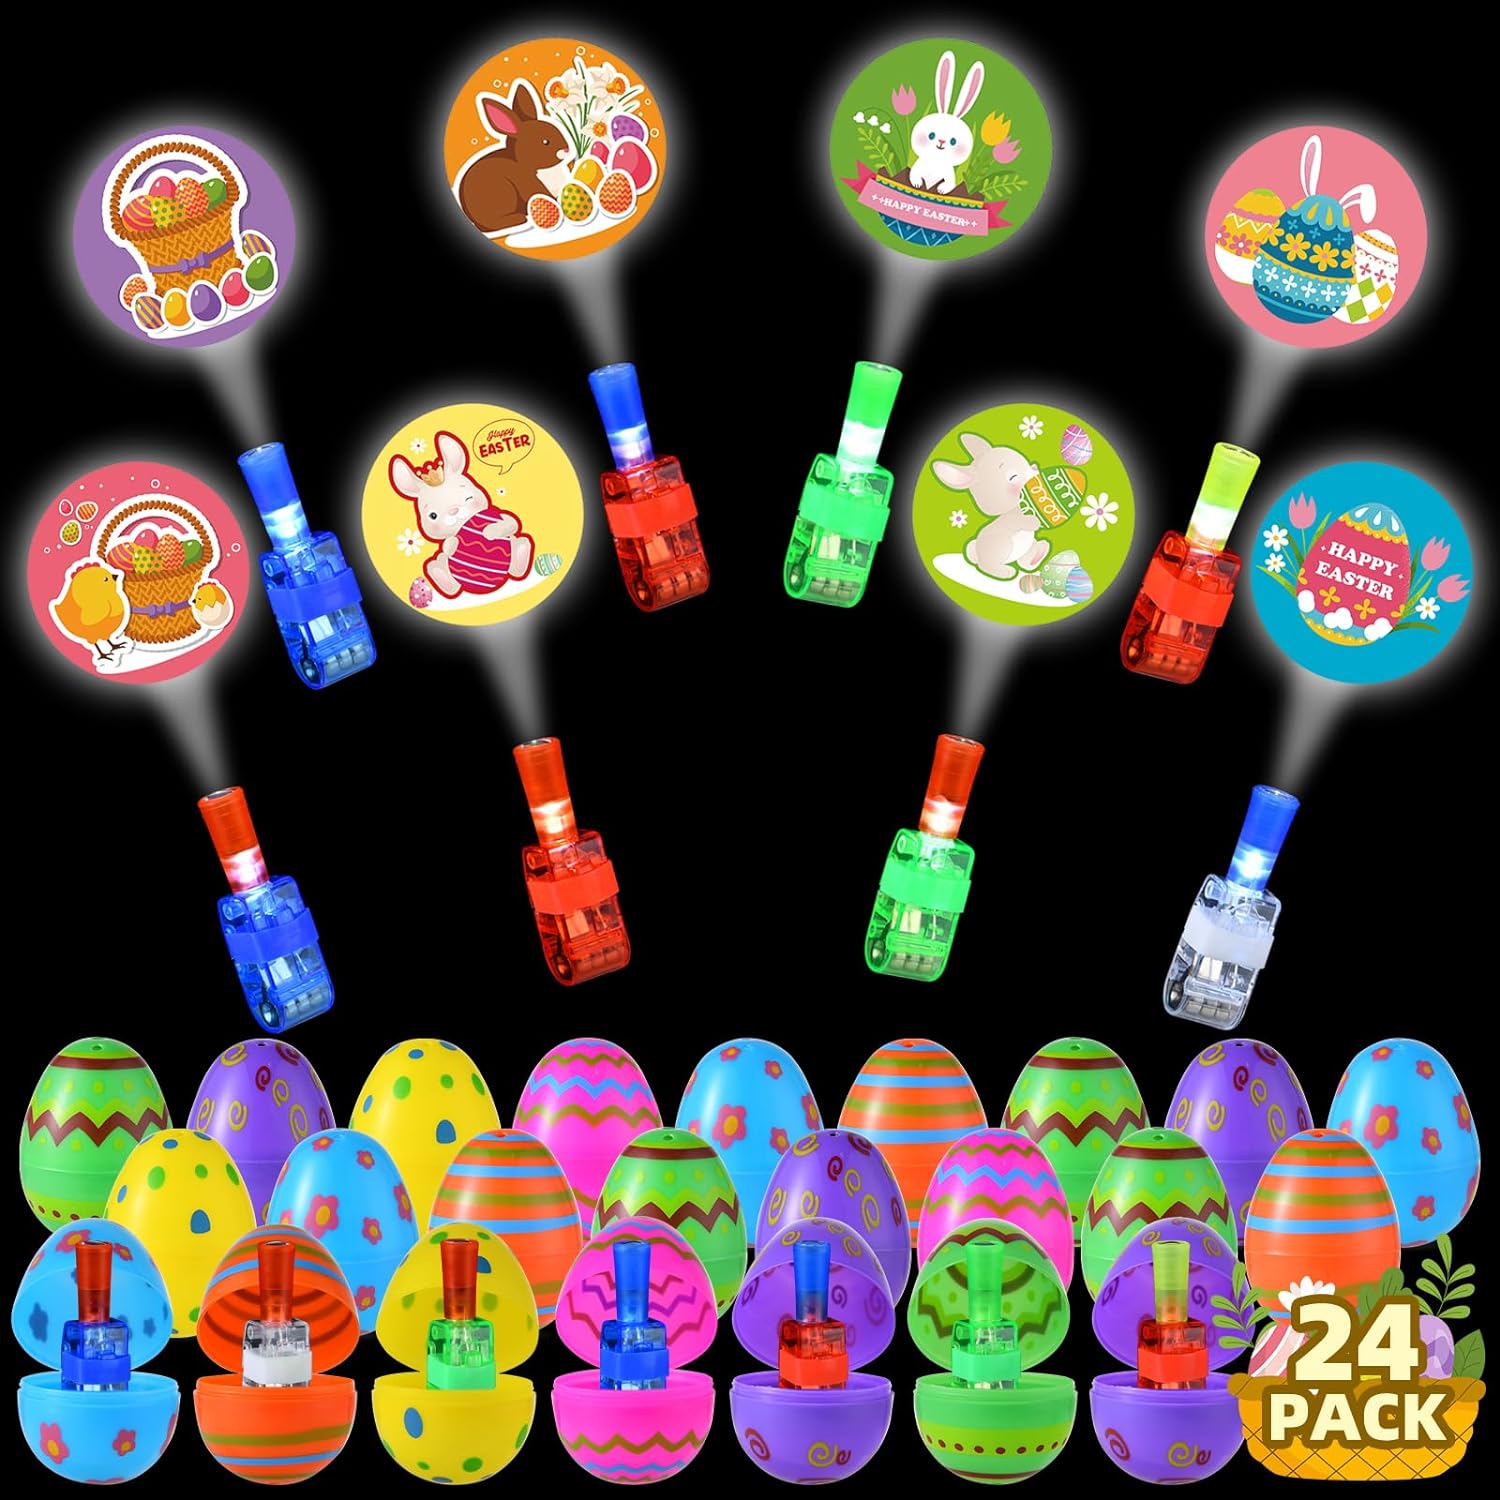 EFLSJIO 24 Pack Prefilled Easter Eggs LED Light Up Finger Lights, Easter Basket Stuffers Toy for Boys Girls Kids, Easter Egg Hunt, Easter Eggs Fillers, Classroom Prize